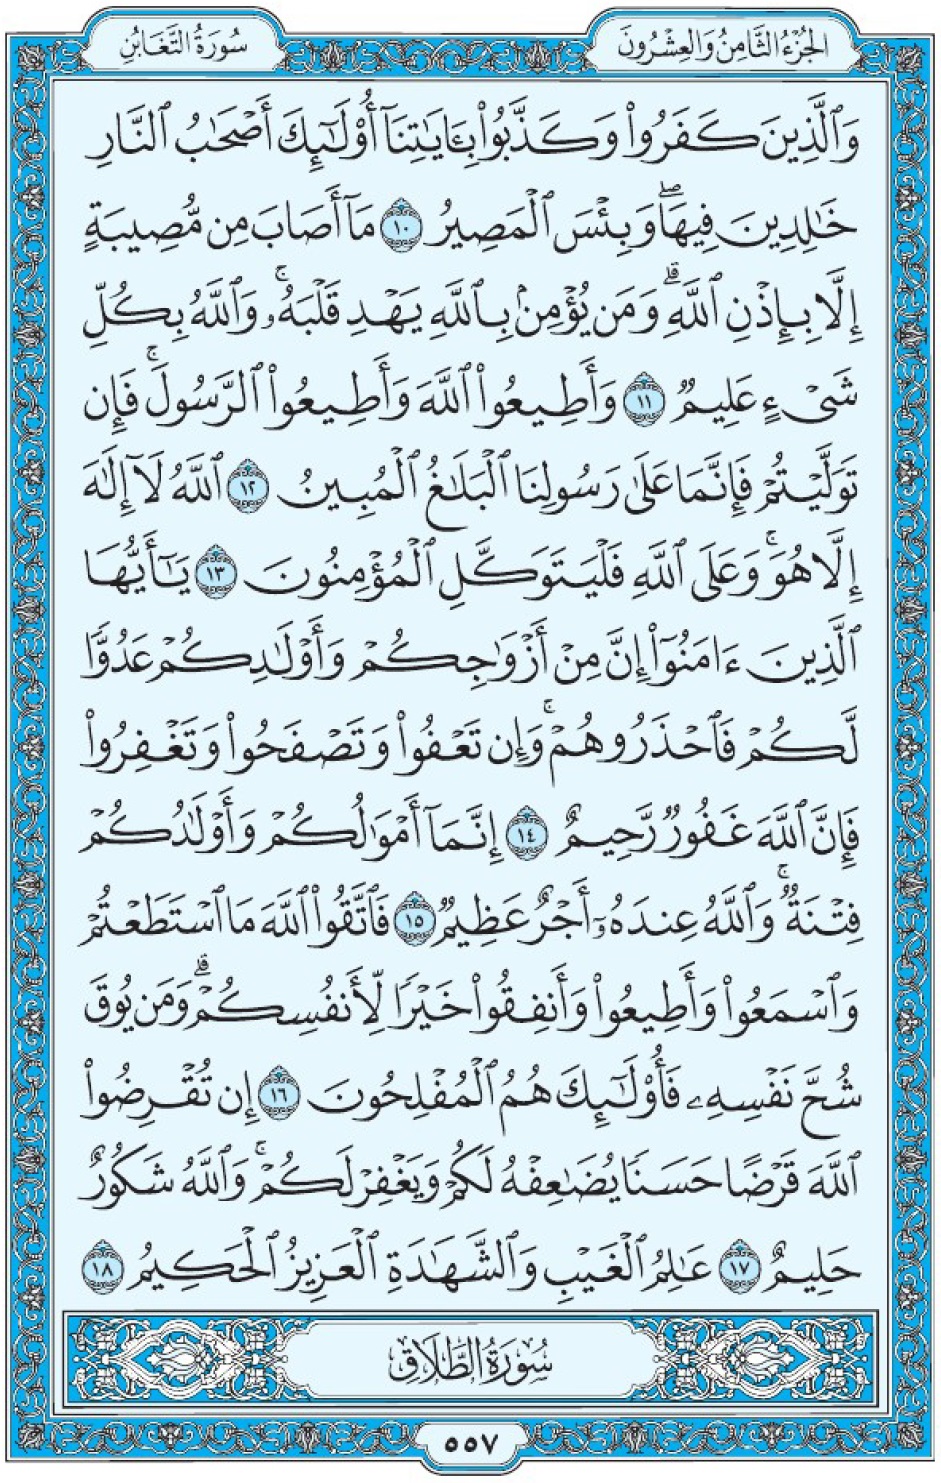 Коран Мединский мусхаф страница 557, ат-Тагабун, аят 10-18